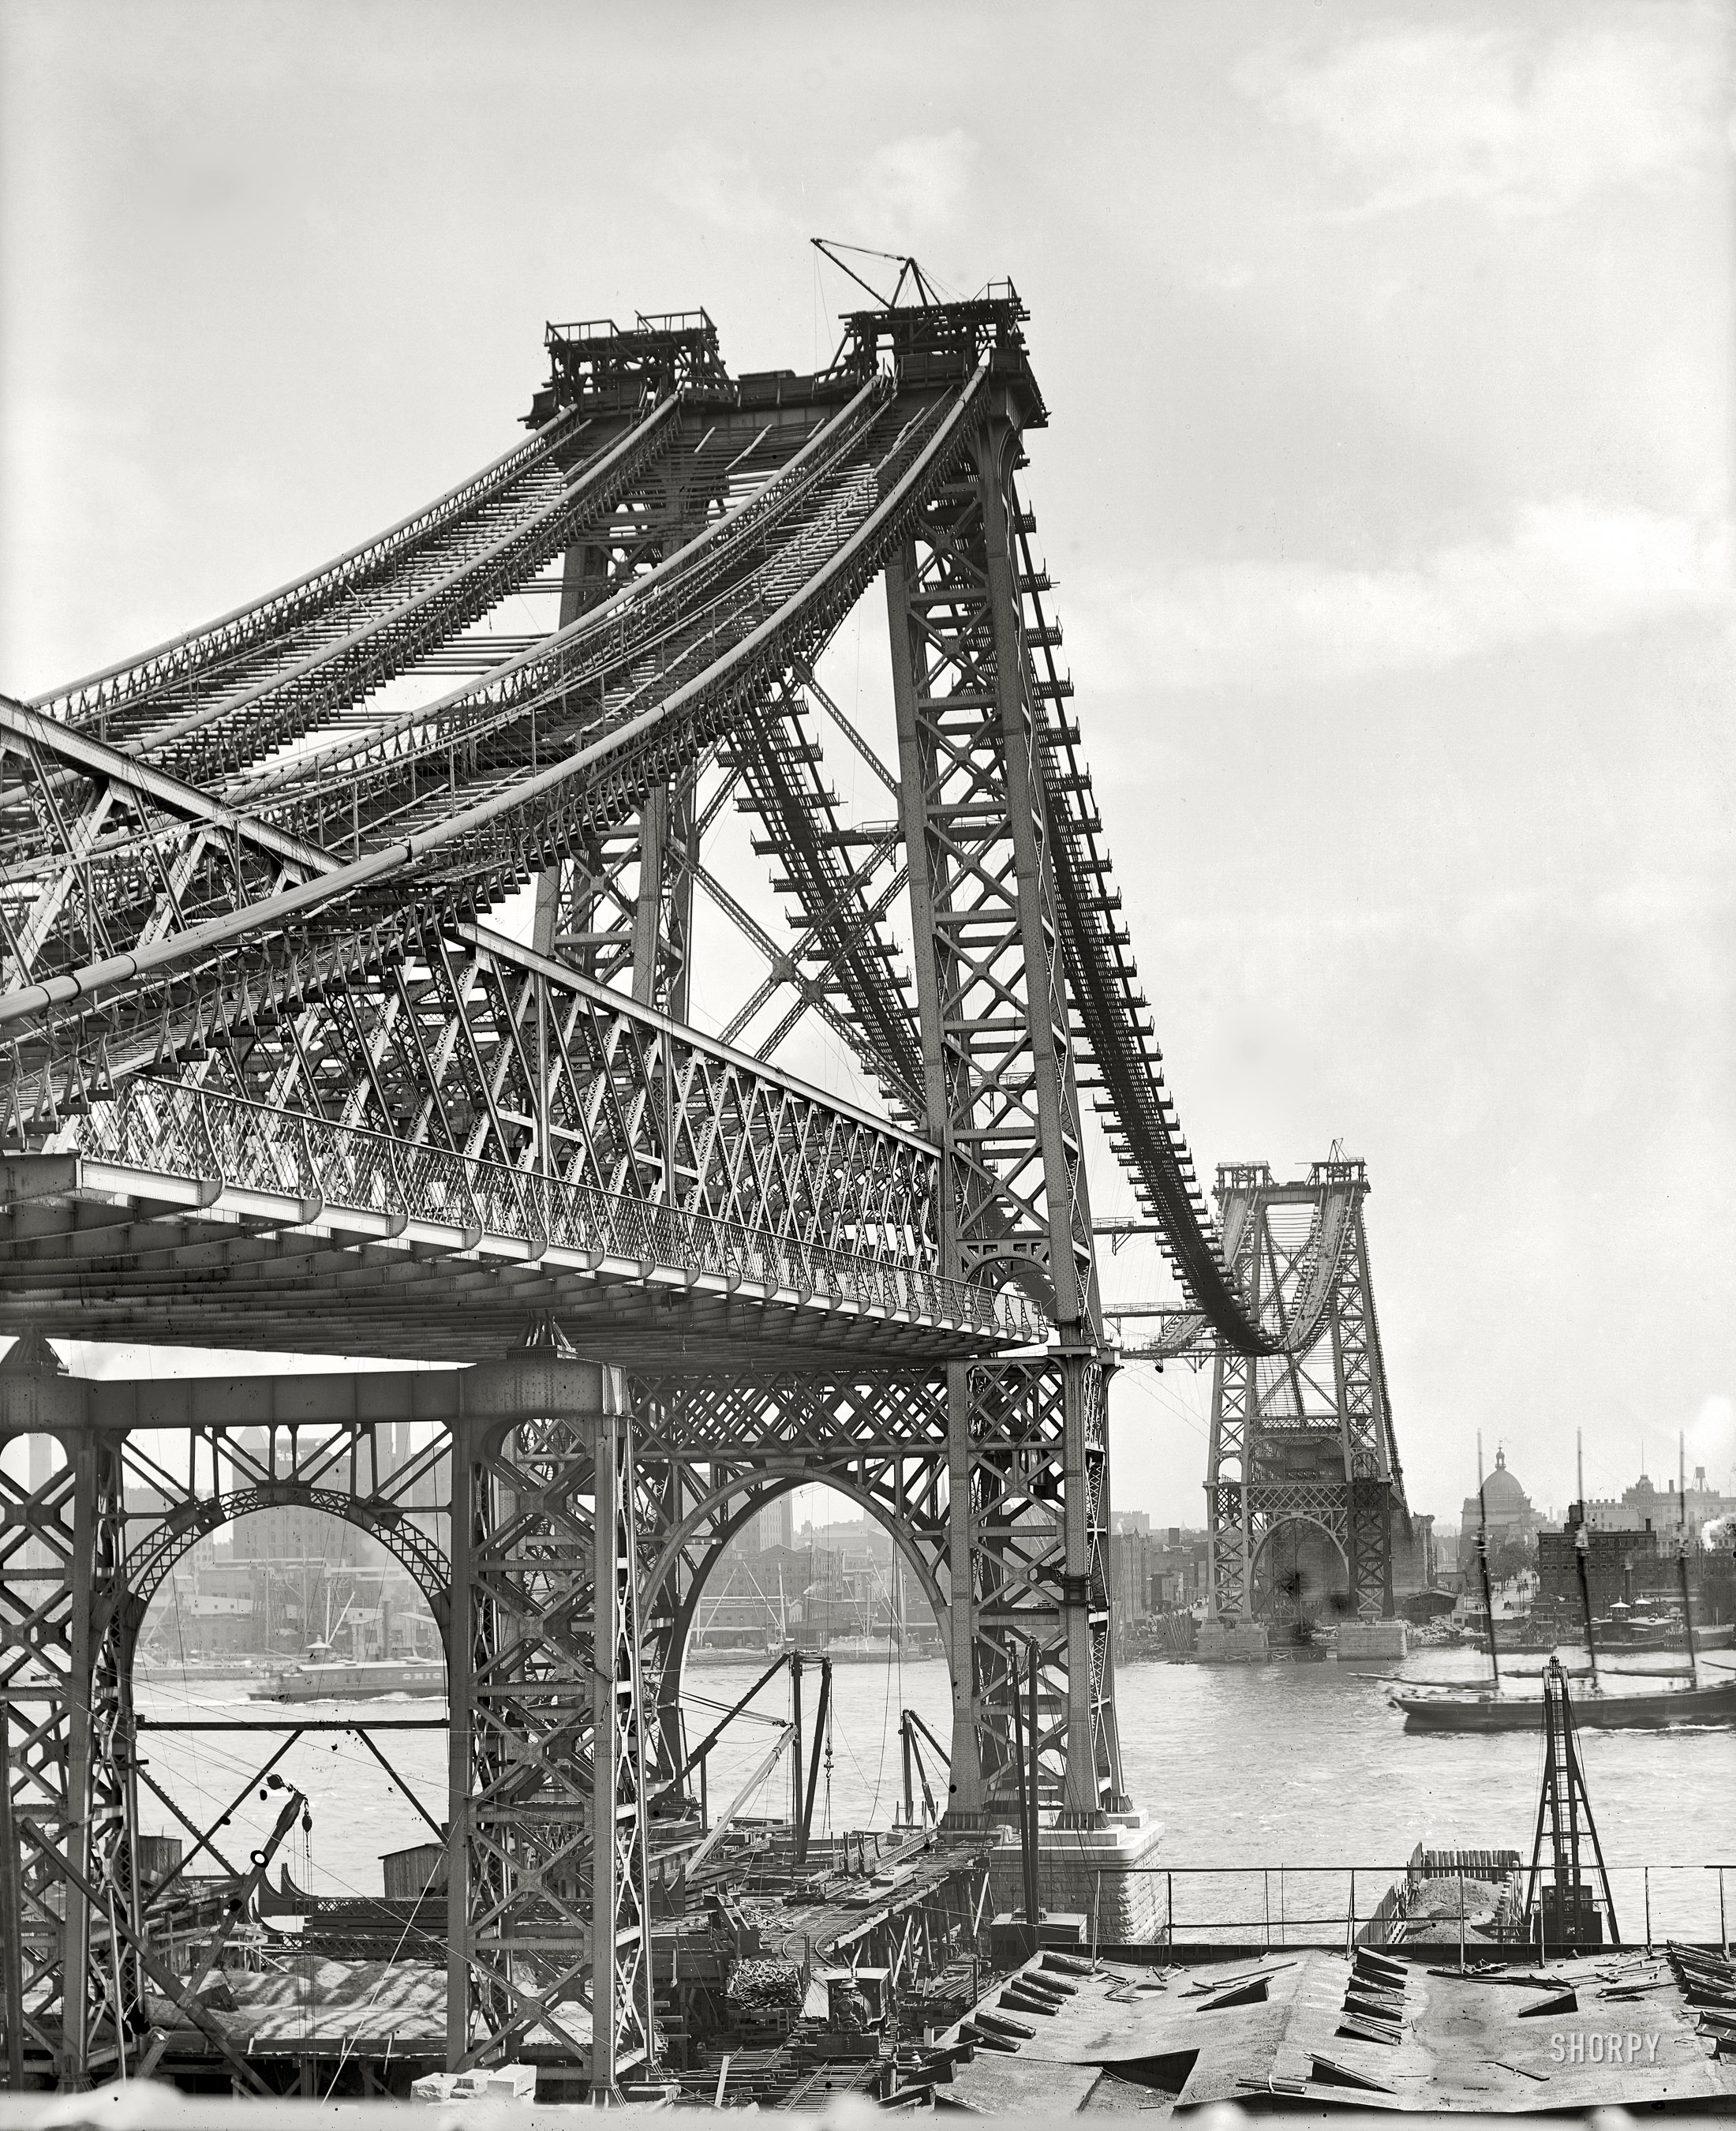 New York circa 1902. "New East River bridge from Brooklyn." The Williamsburg Bridge under construction. Detroit Publishing Company. View full size.